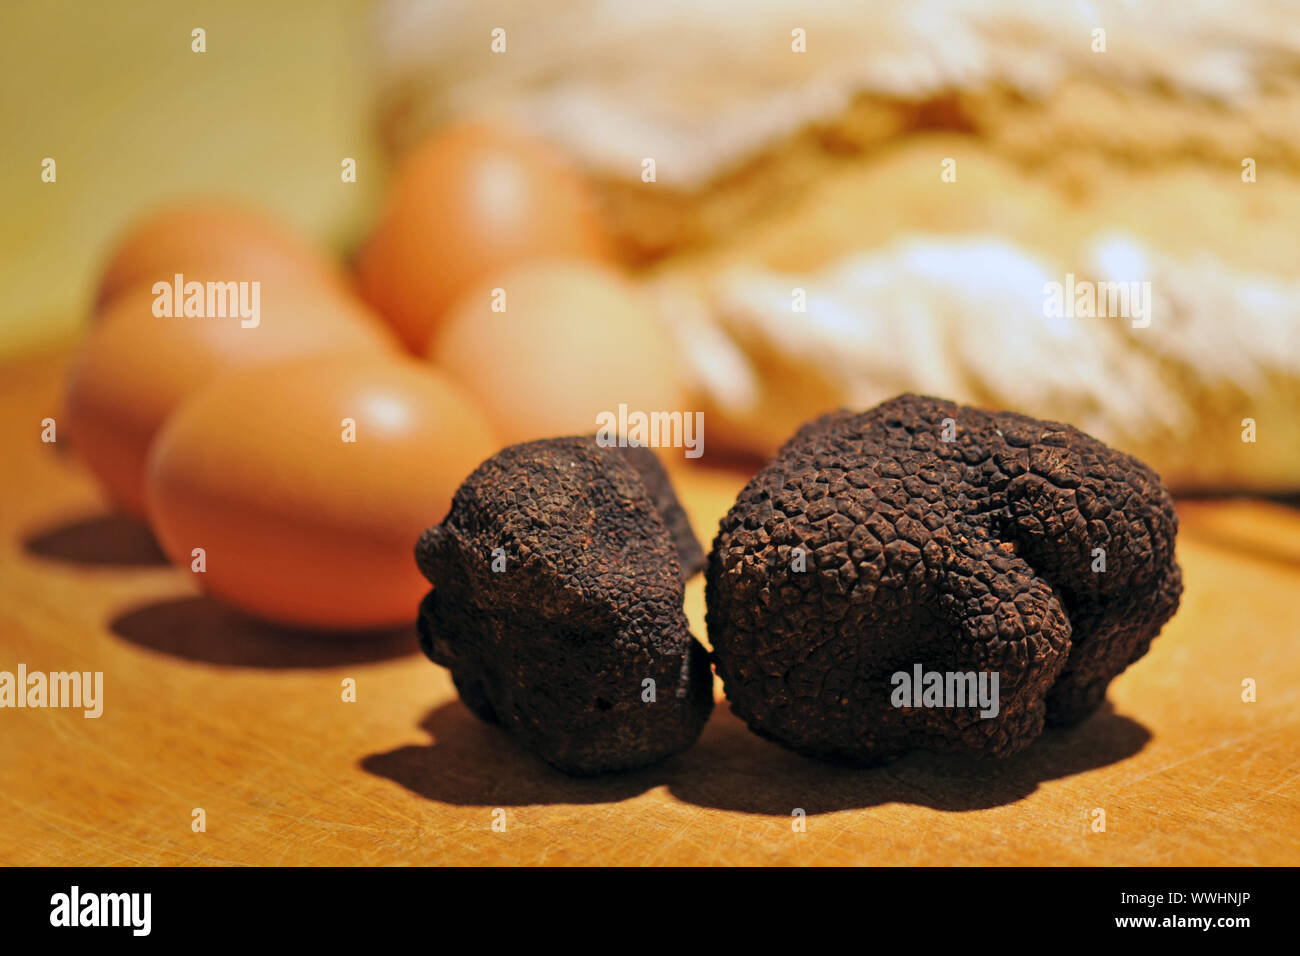 black truffles (tuber melanosporum) on a table with eggs and bred Stock Photo